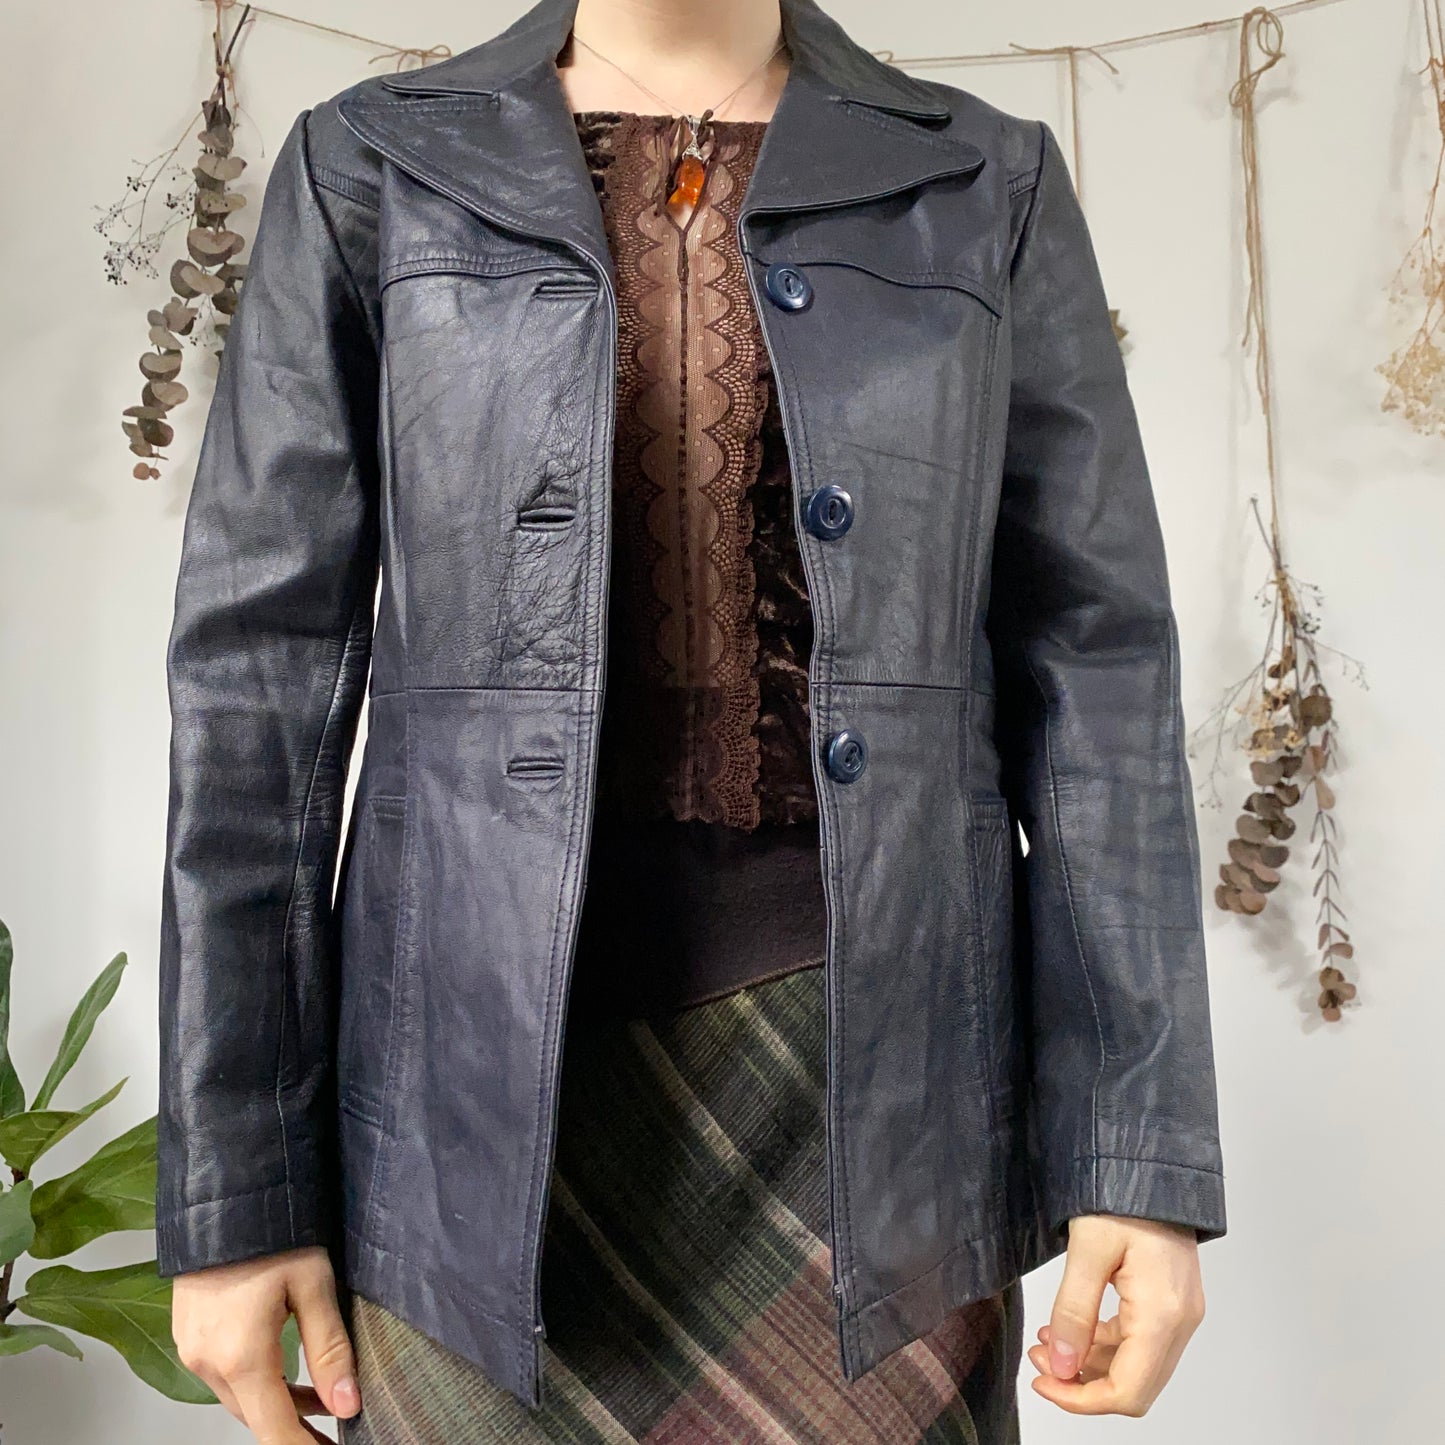 Navy blue leather jacket - size S